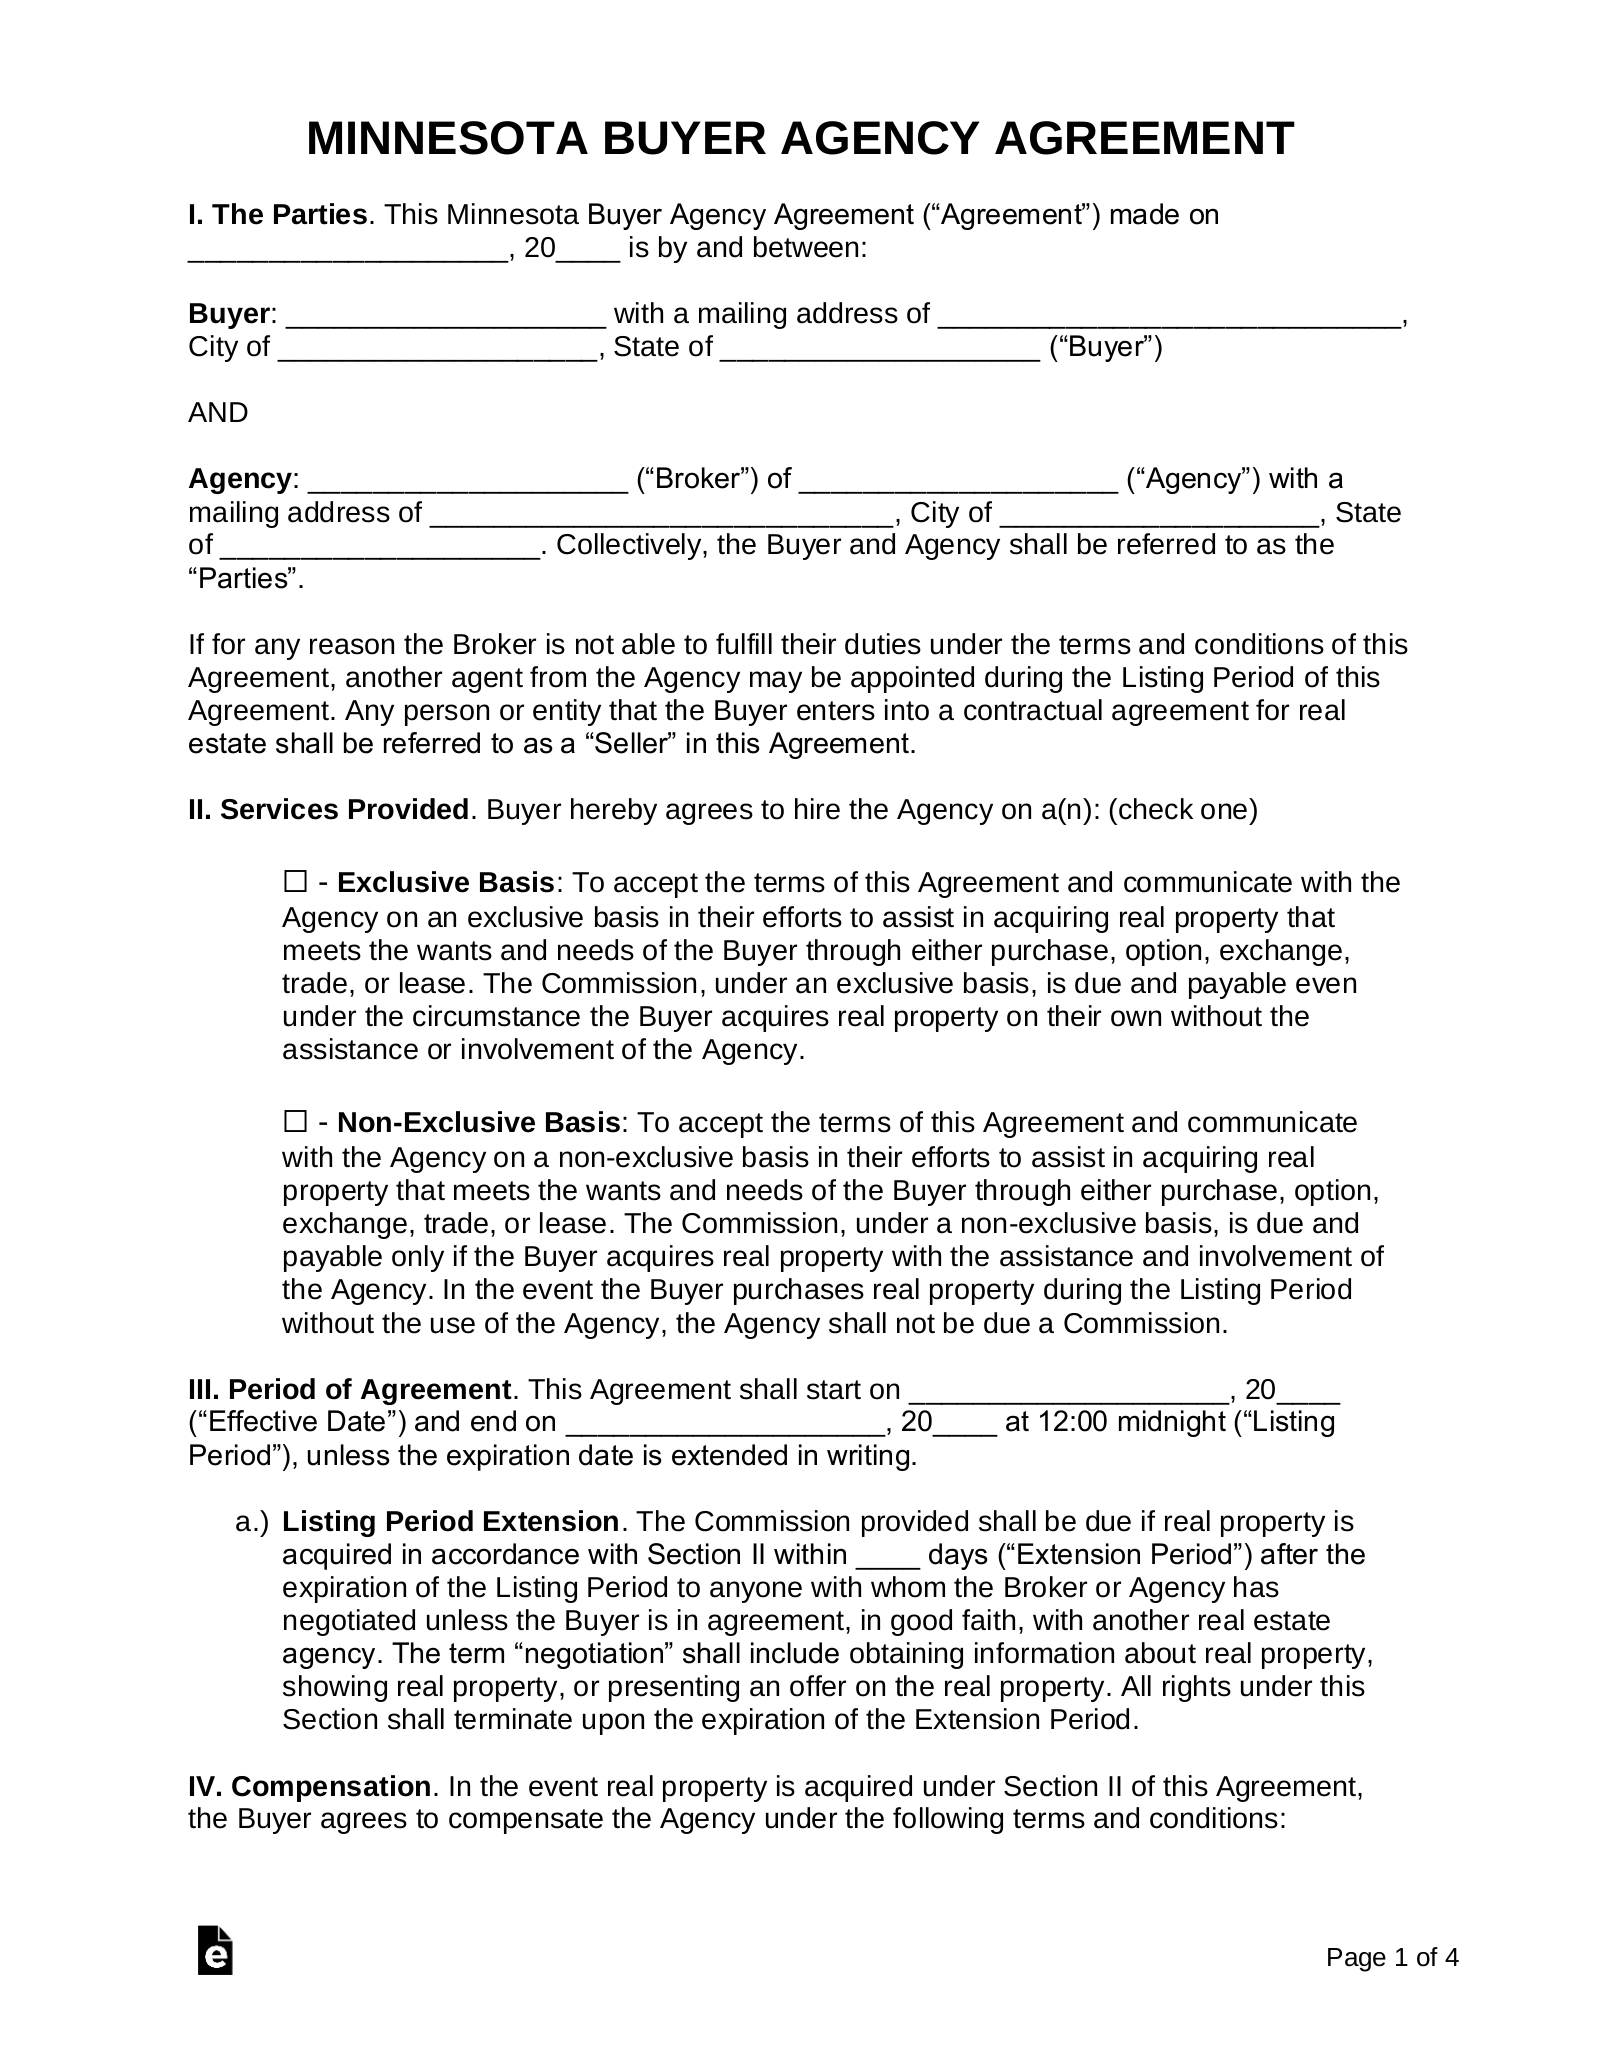 Minnesota Buyer Agency Agreement